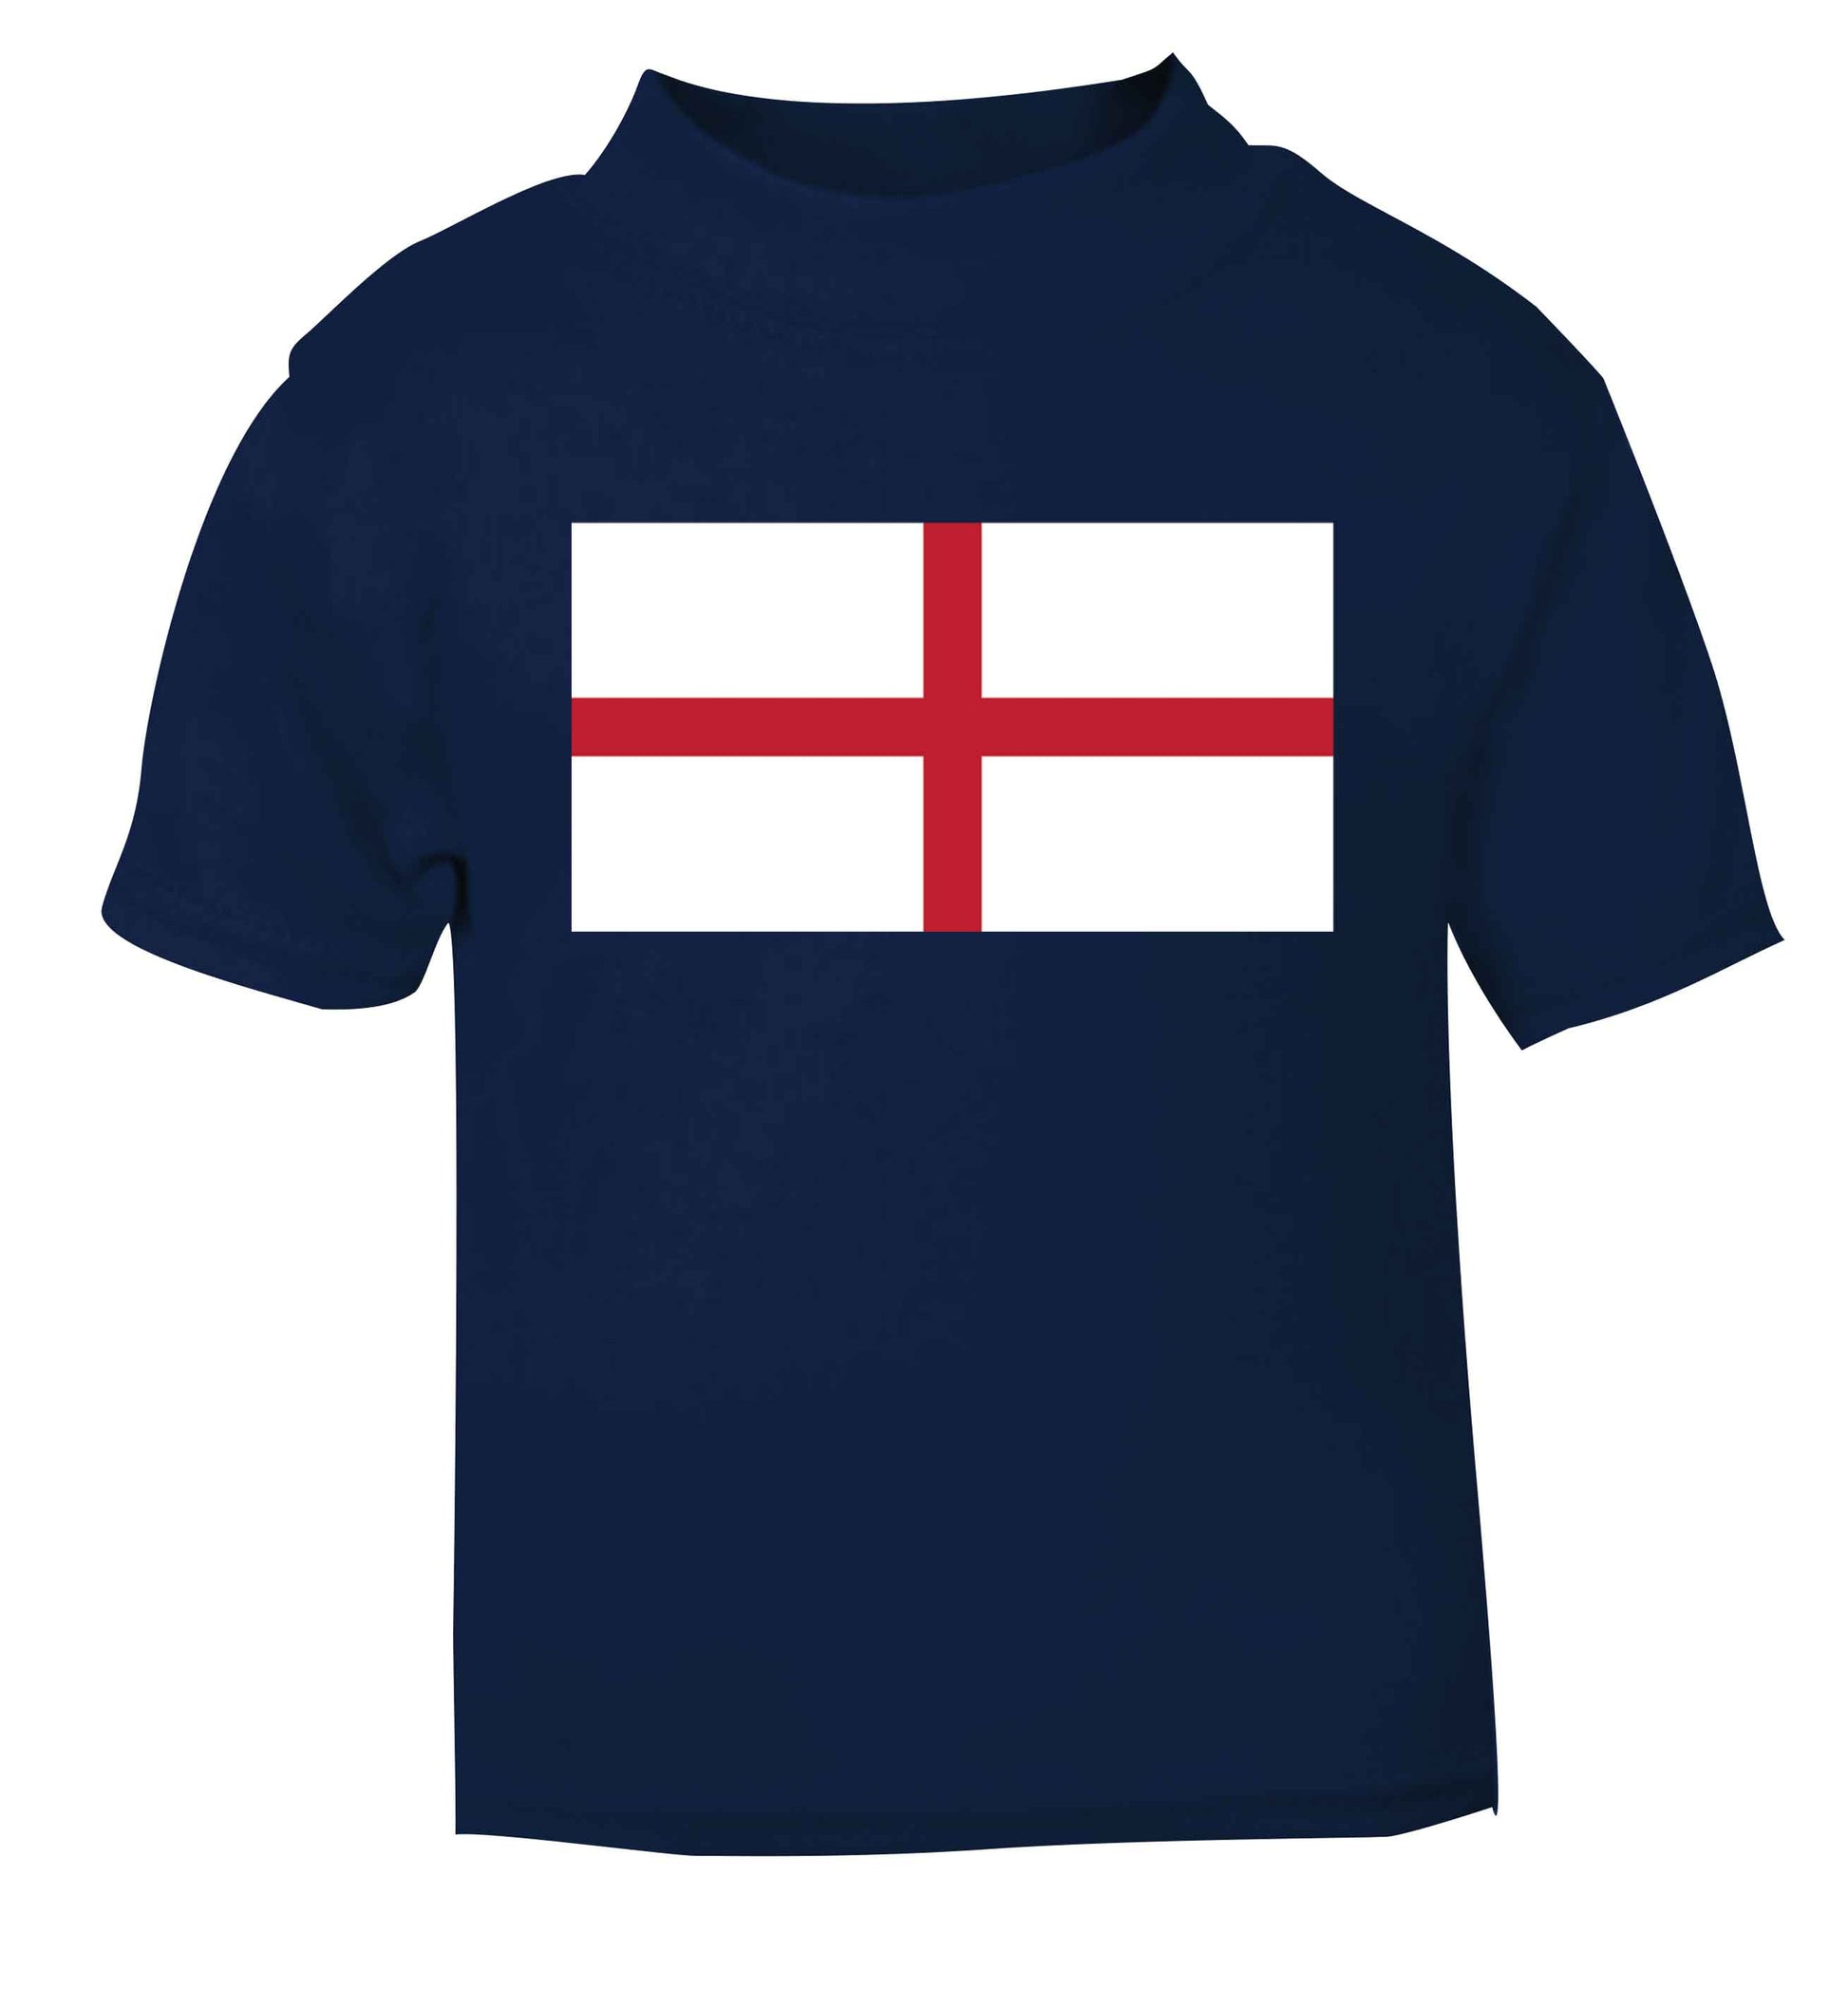 England Flag navy baby toddler Tshirt 2 Years